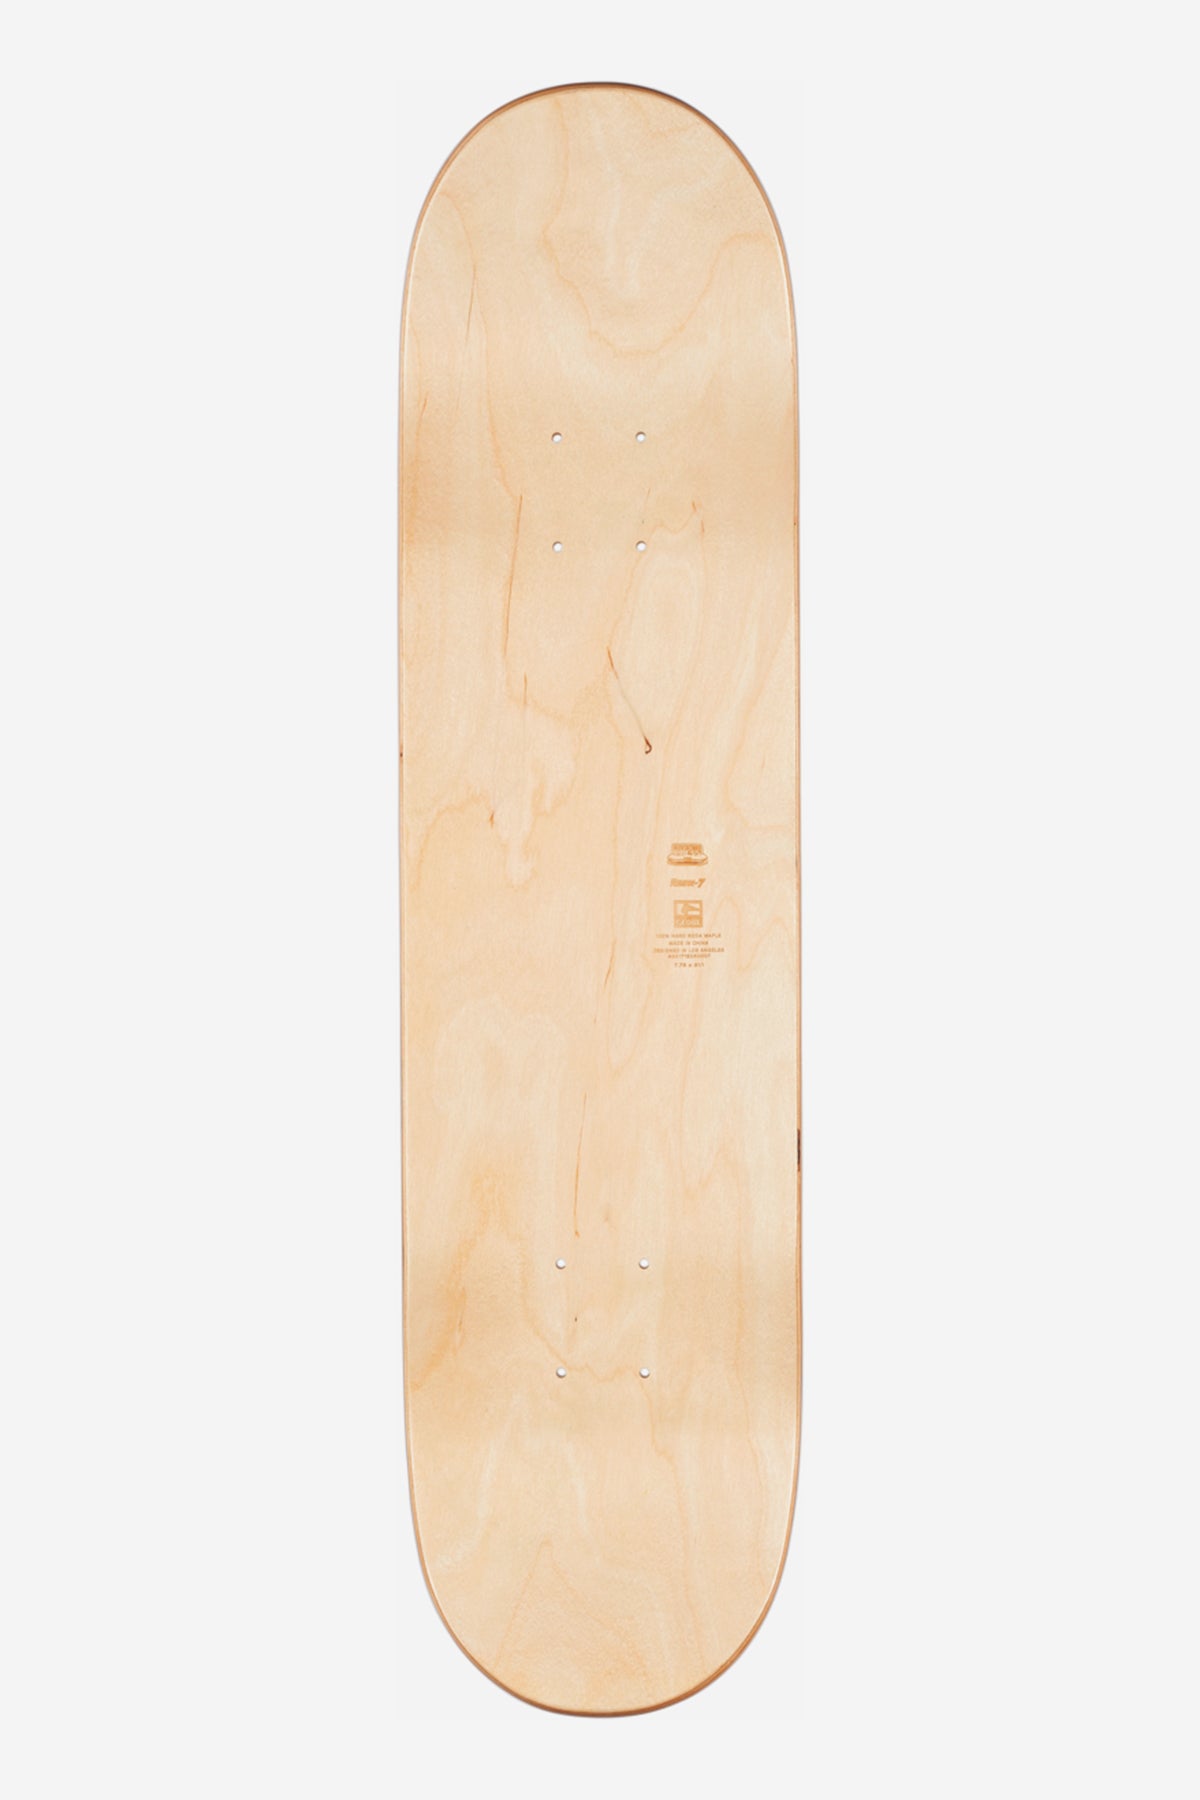 Goodstock - Navy - 7.875" Skateboard Deck